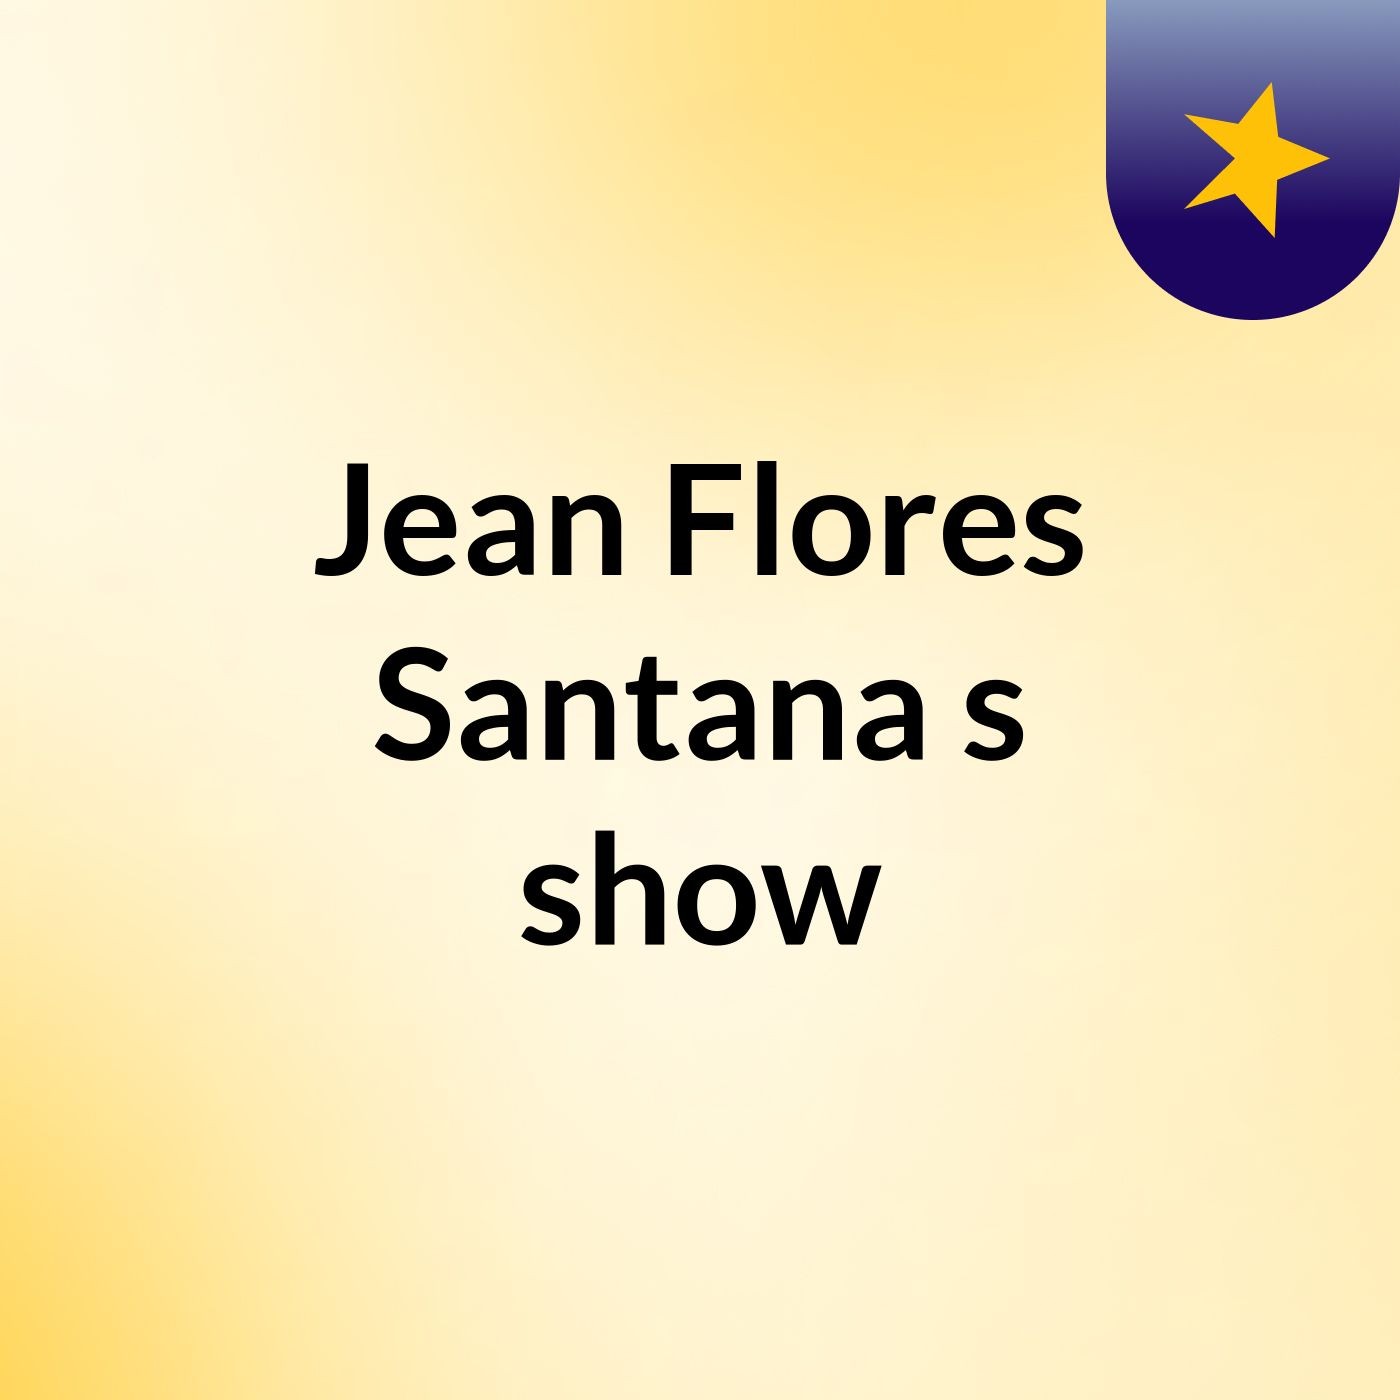 Jean Flores Santana's show